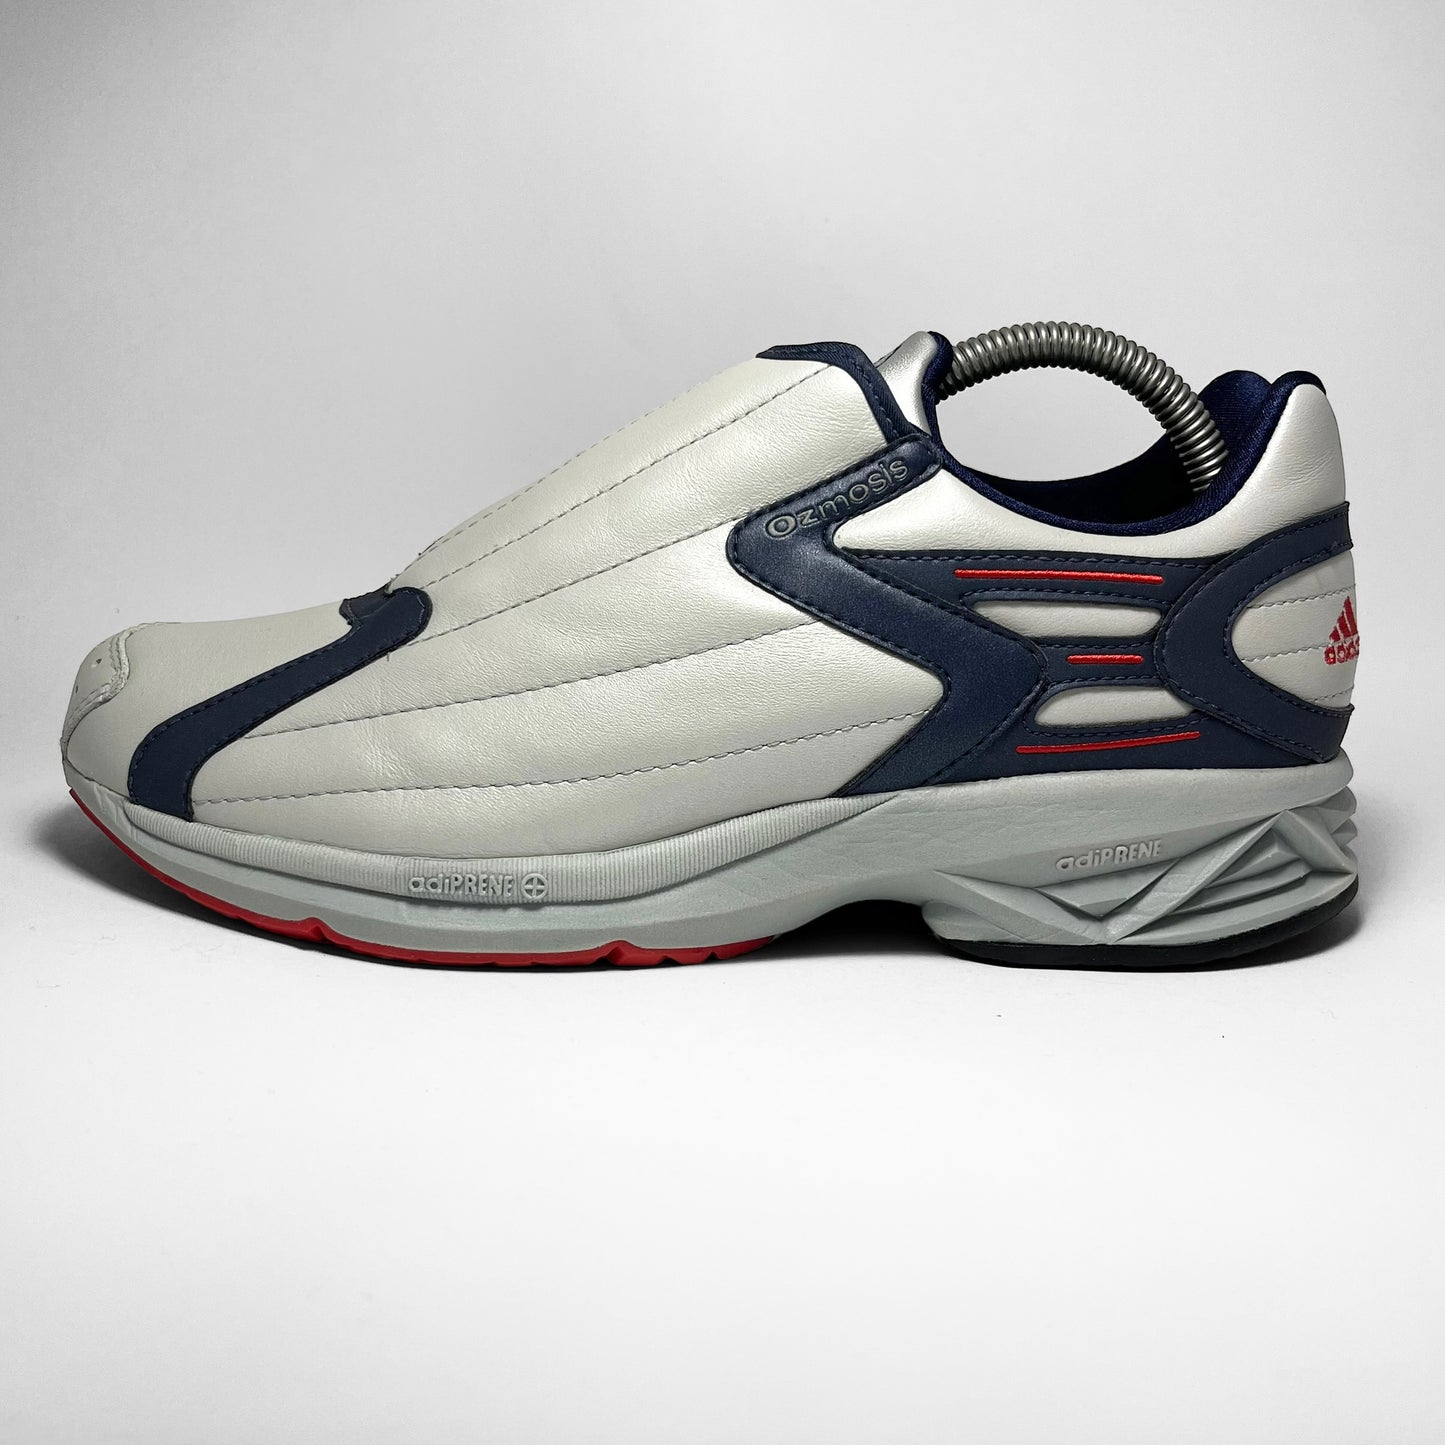 Adidas Ozmosis (2000)